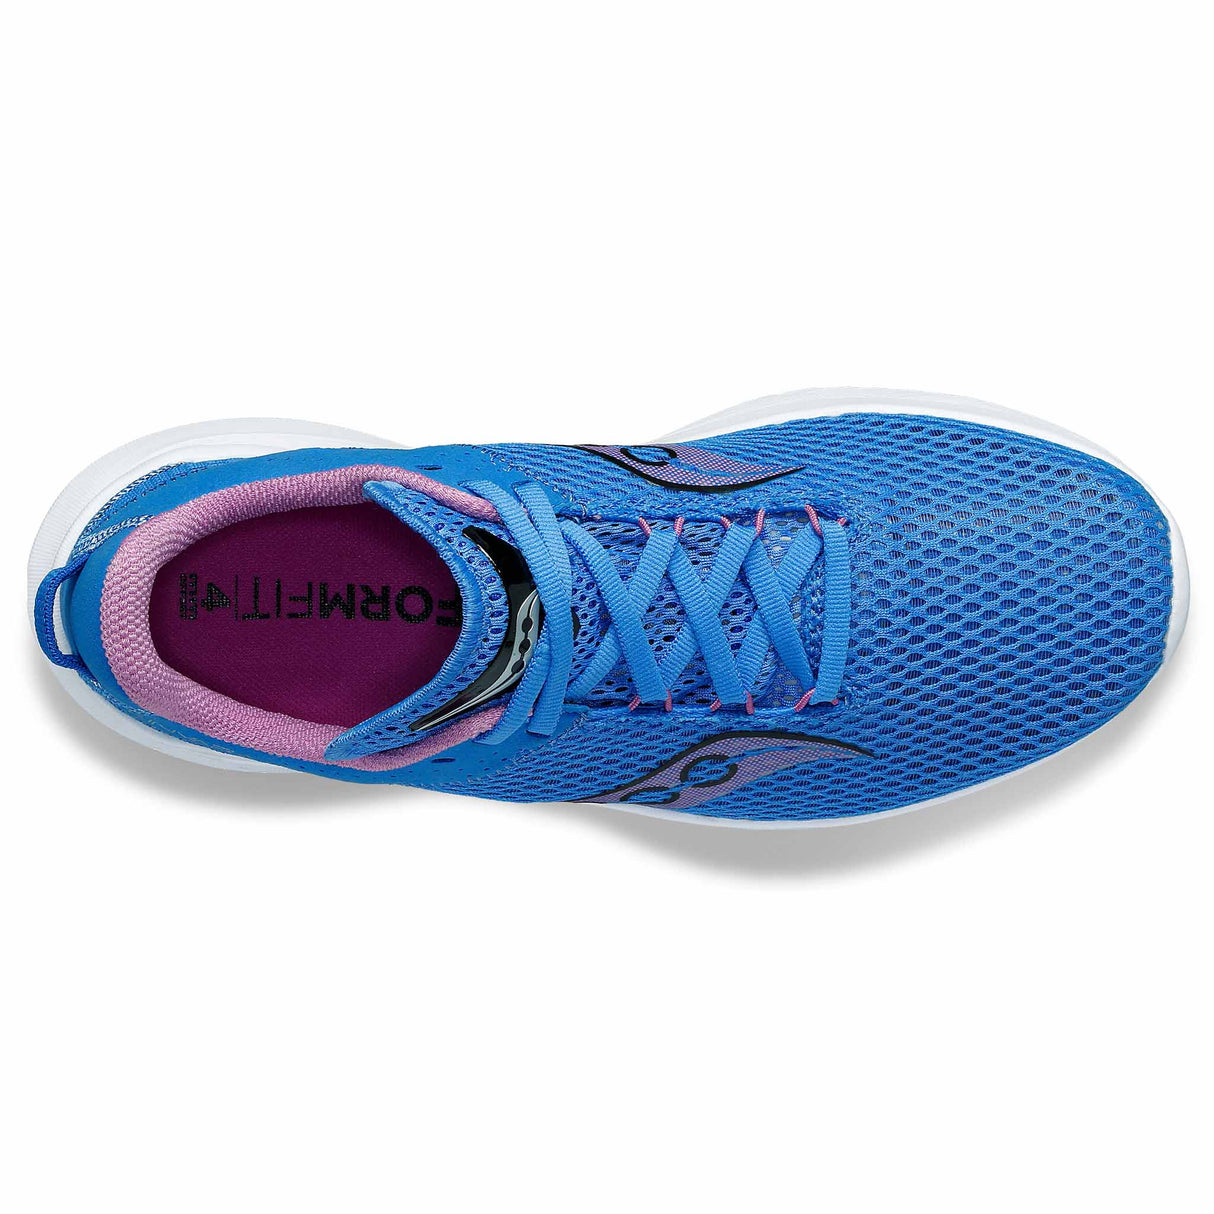 Saucony Kinvara 14 chaussures de course à pied femme - Bluelight / Grape